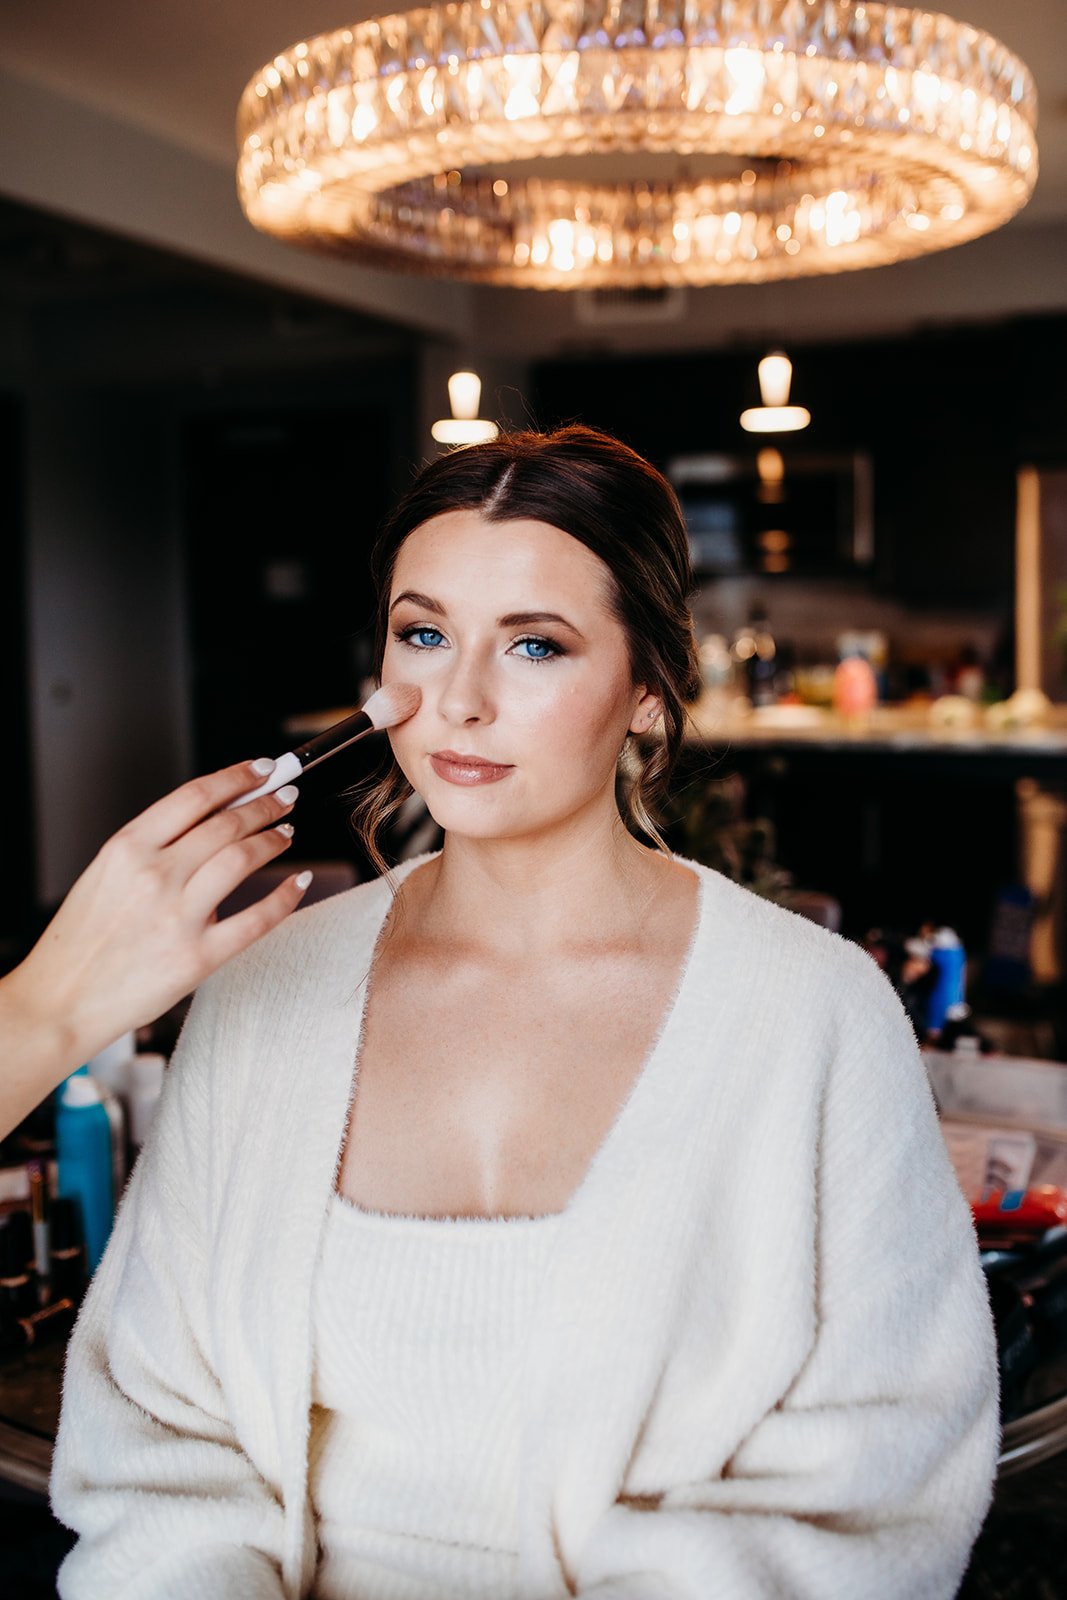 makeup artist brushes makeup on bride's face